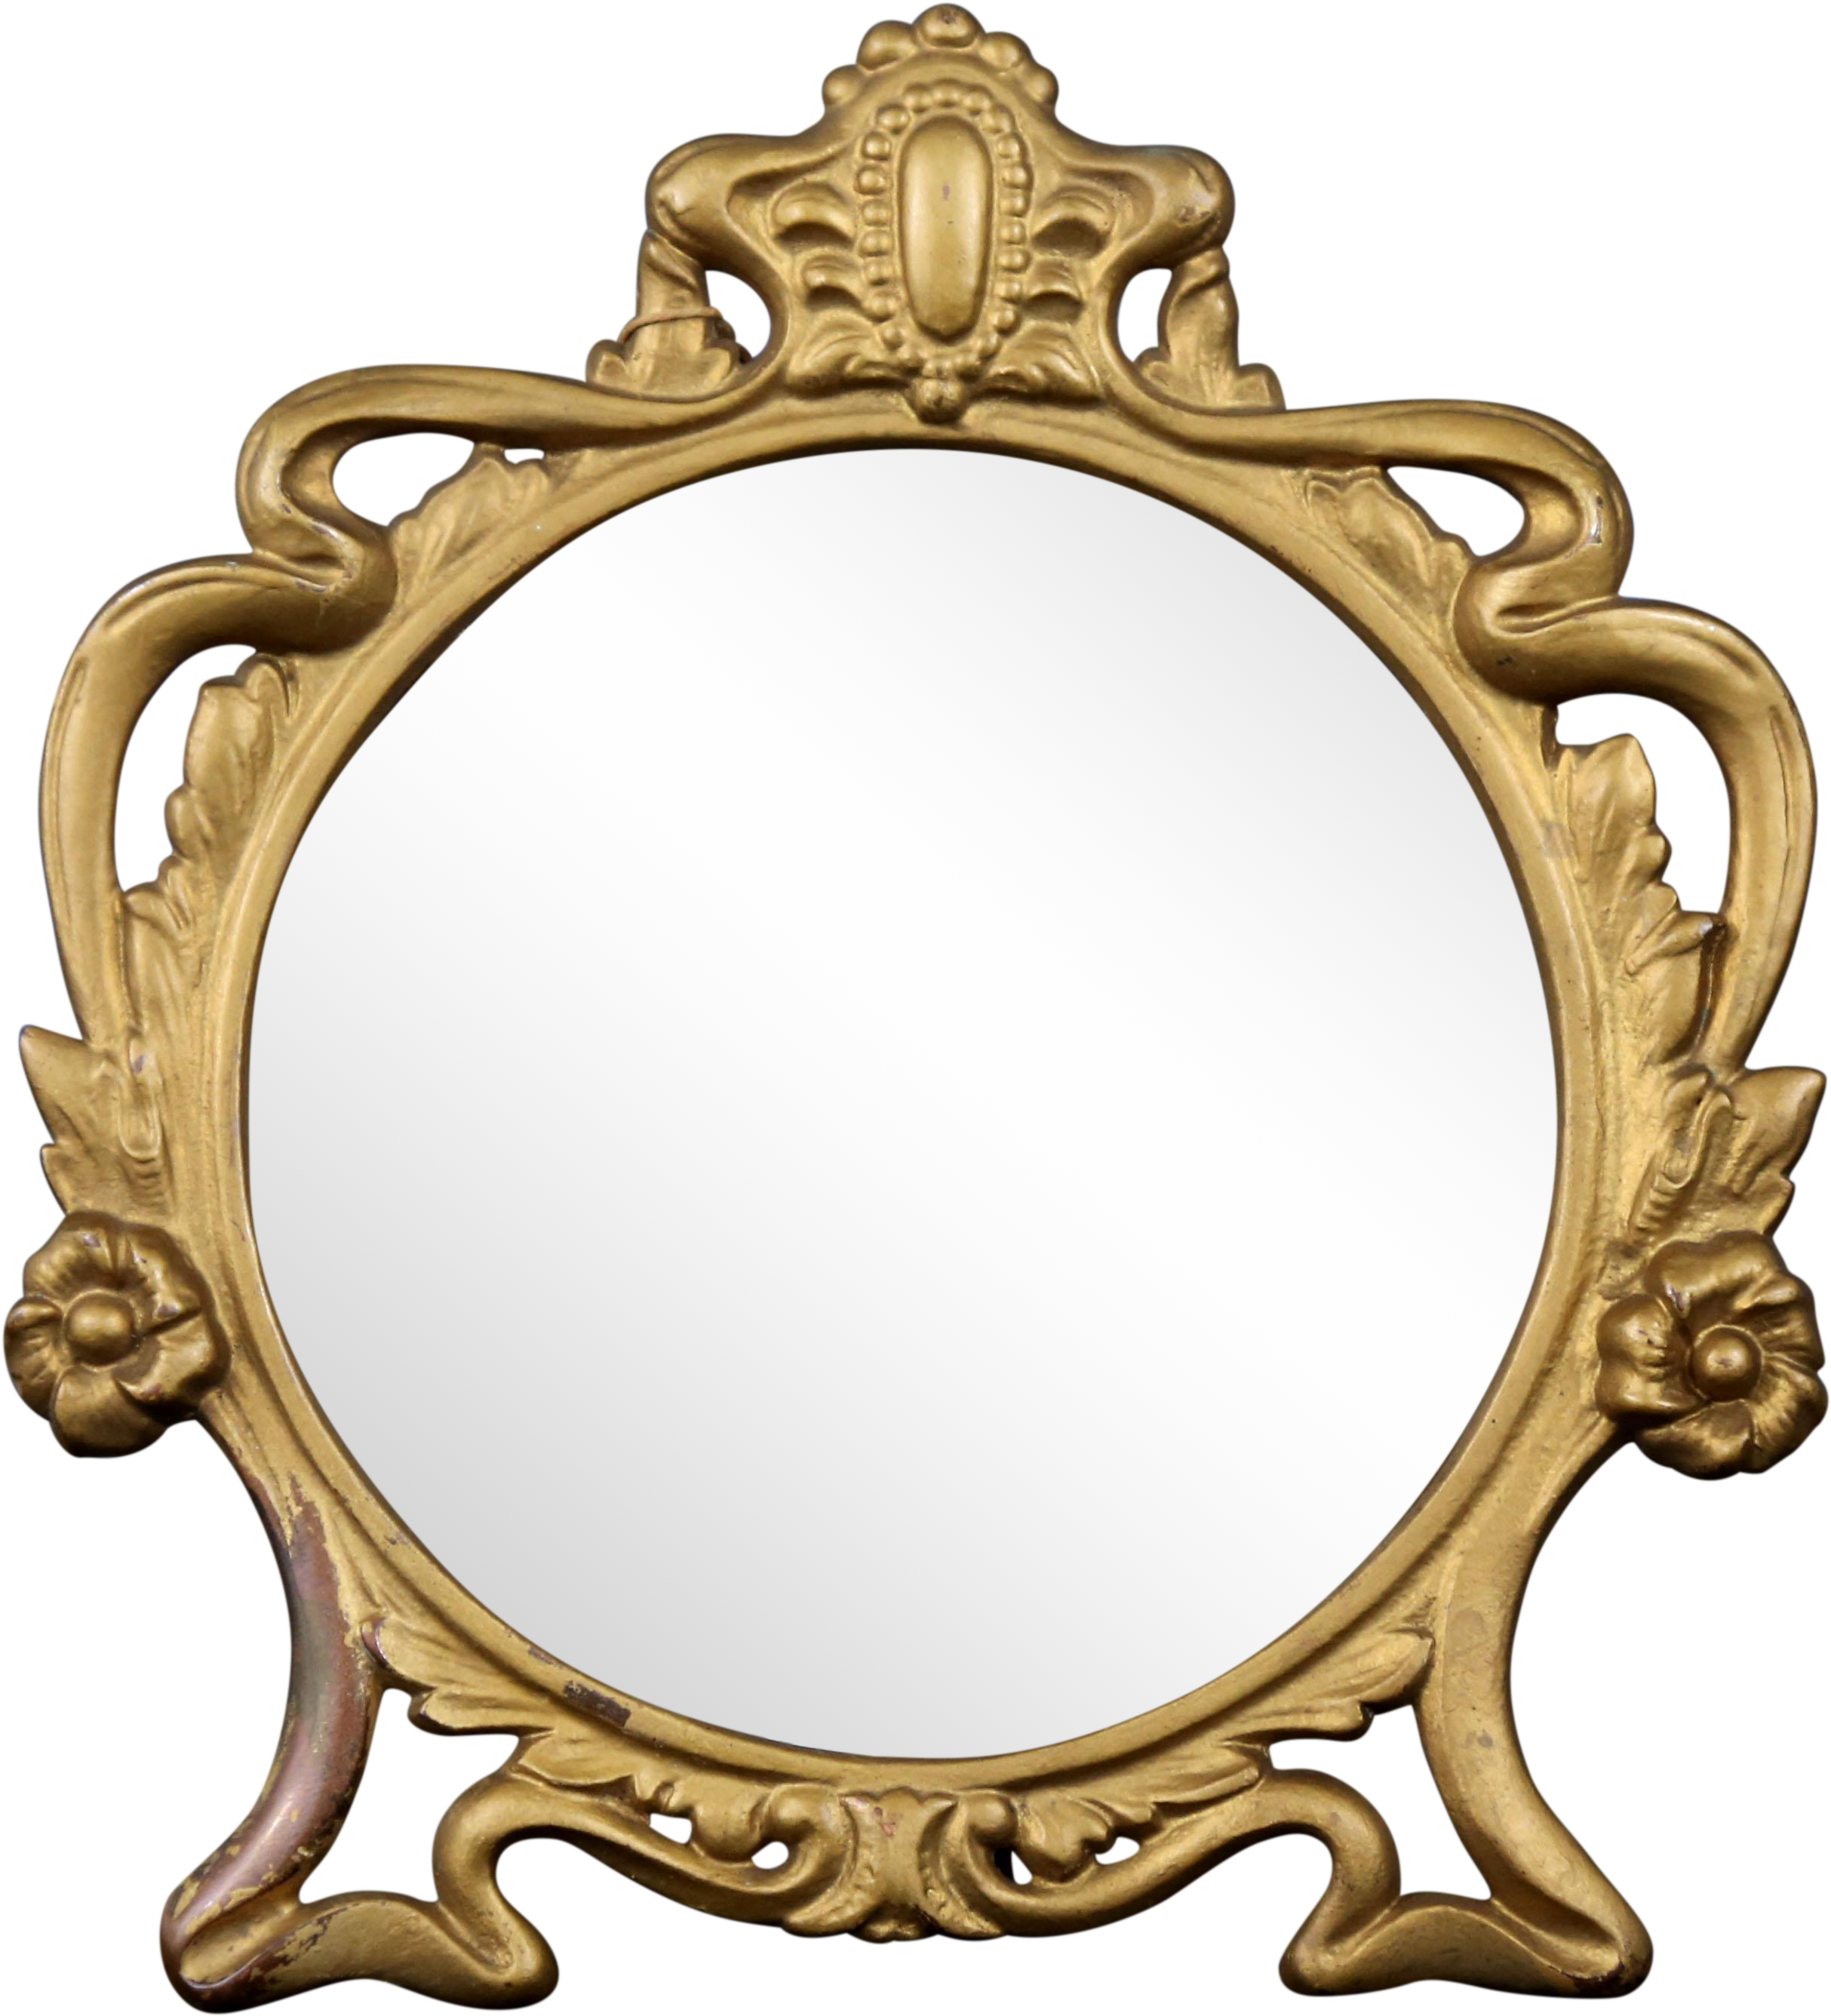 Free Mirror Transparent Png, Download Free Mirror Transparent Png png